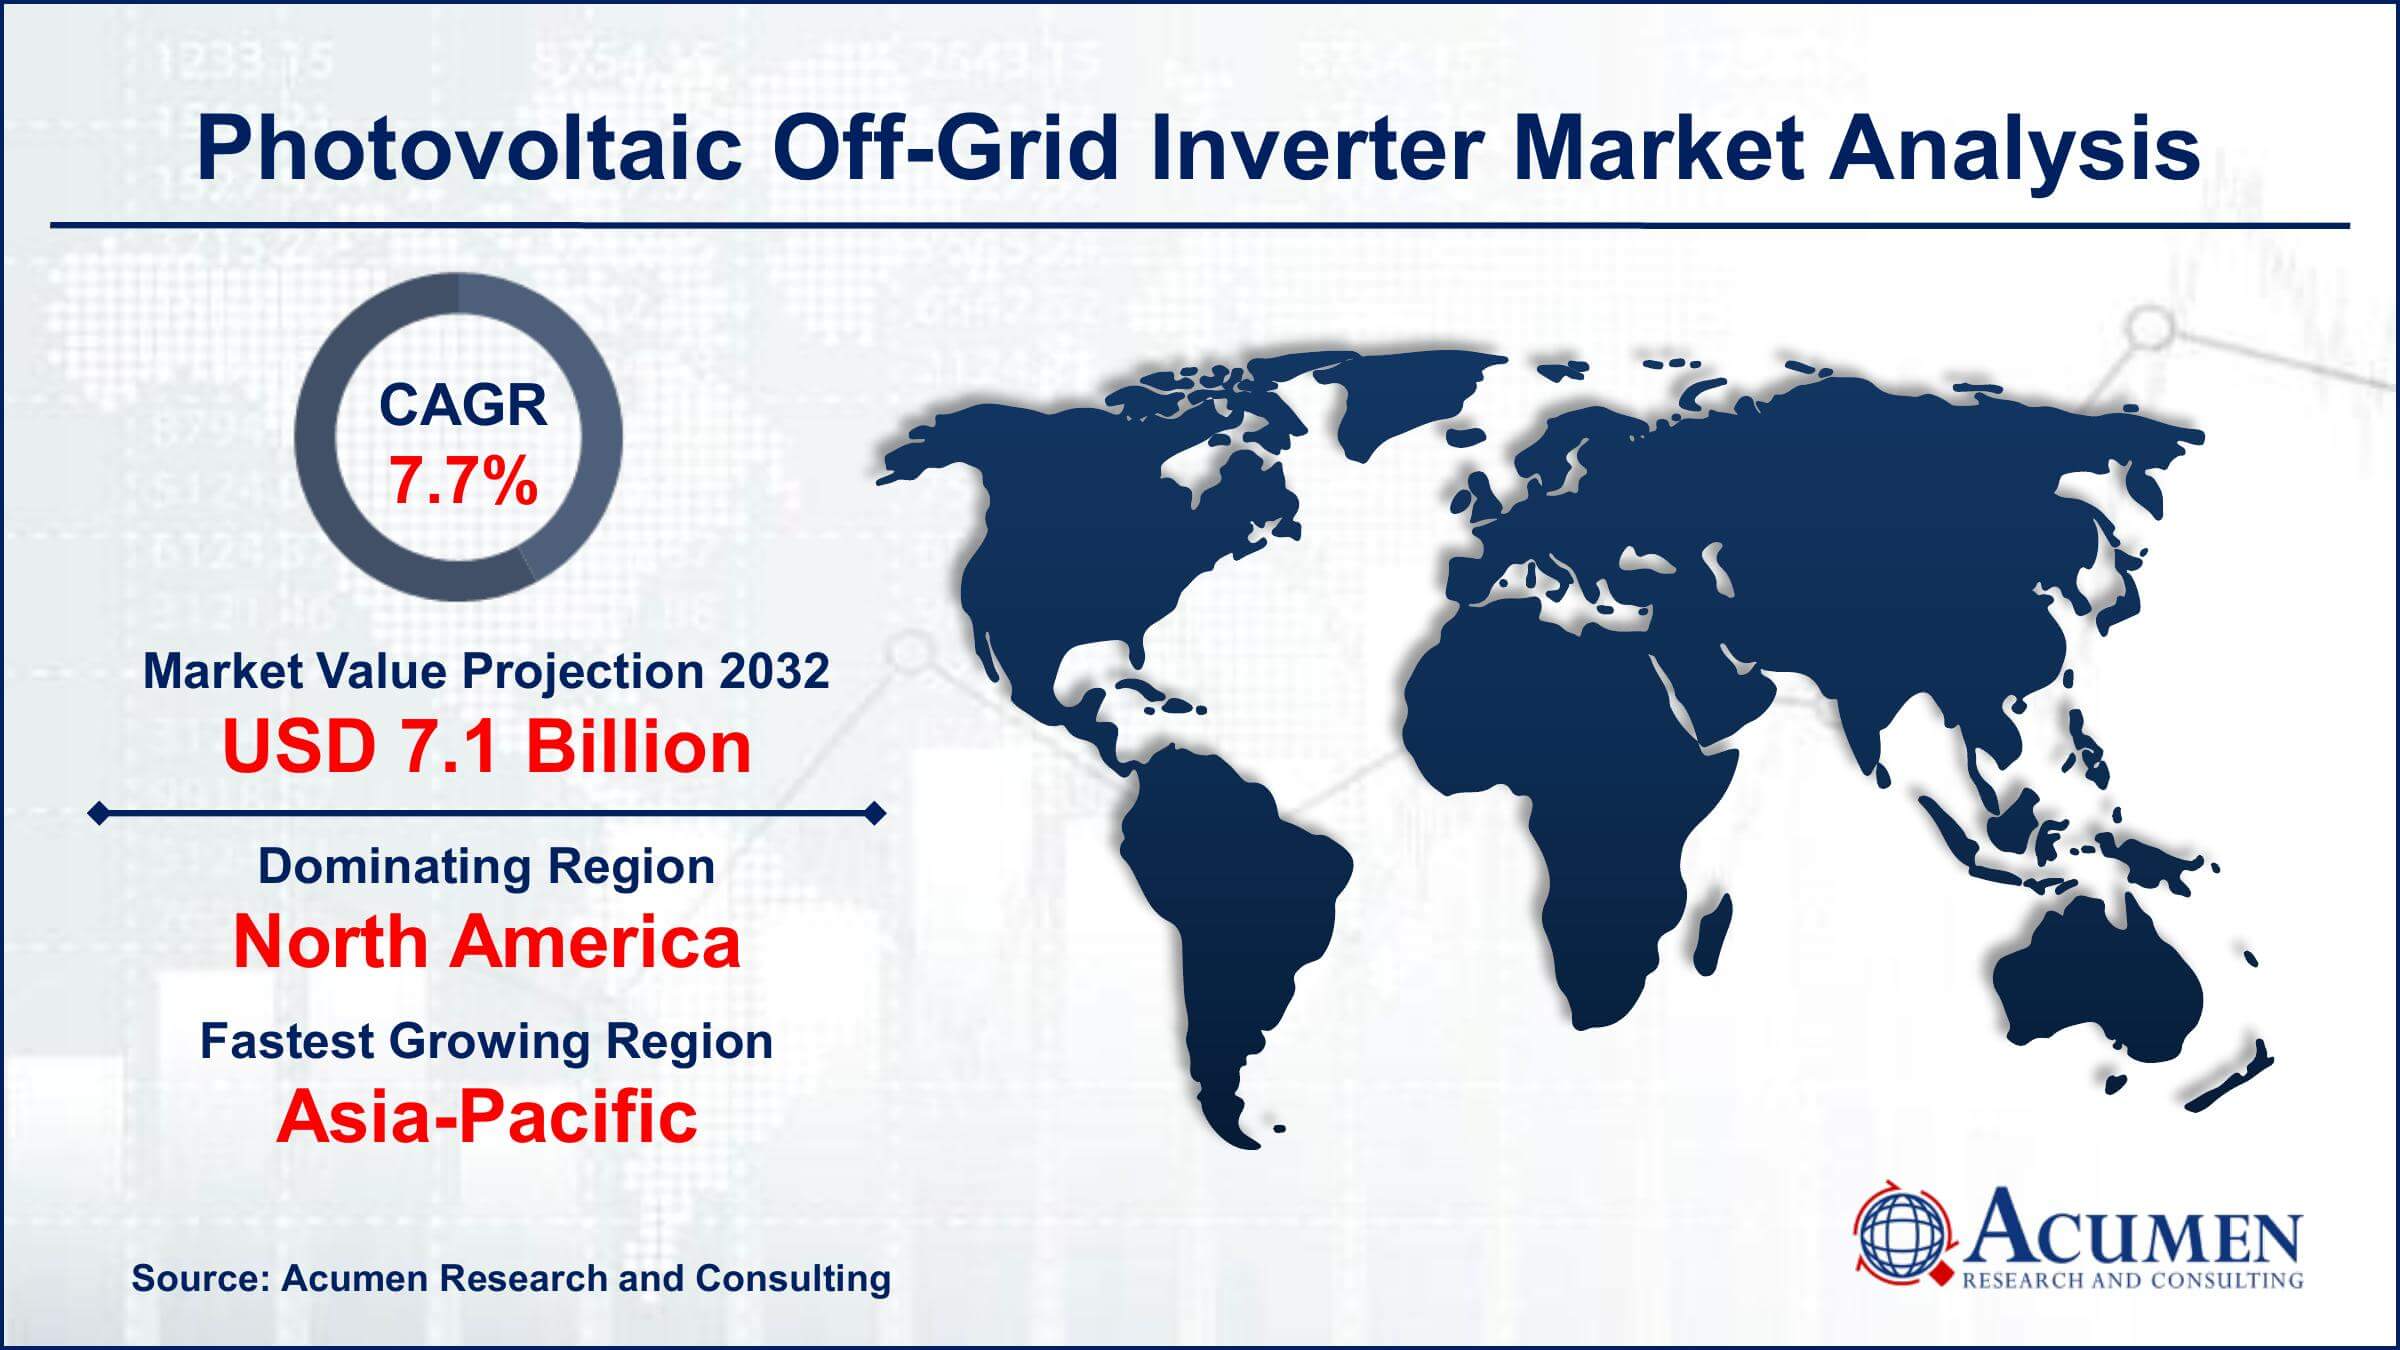 Global Photovoltaic Off-Grid Inverter Market Trends